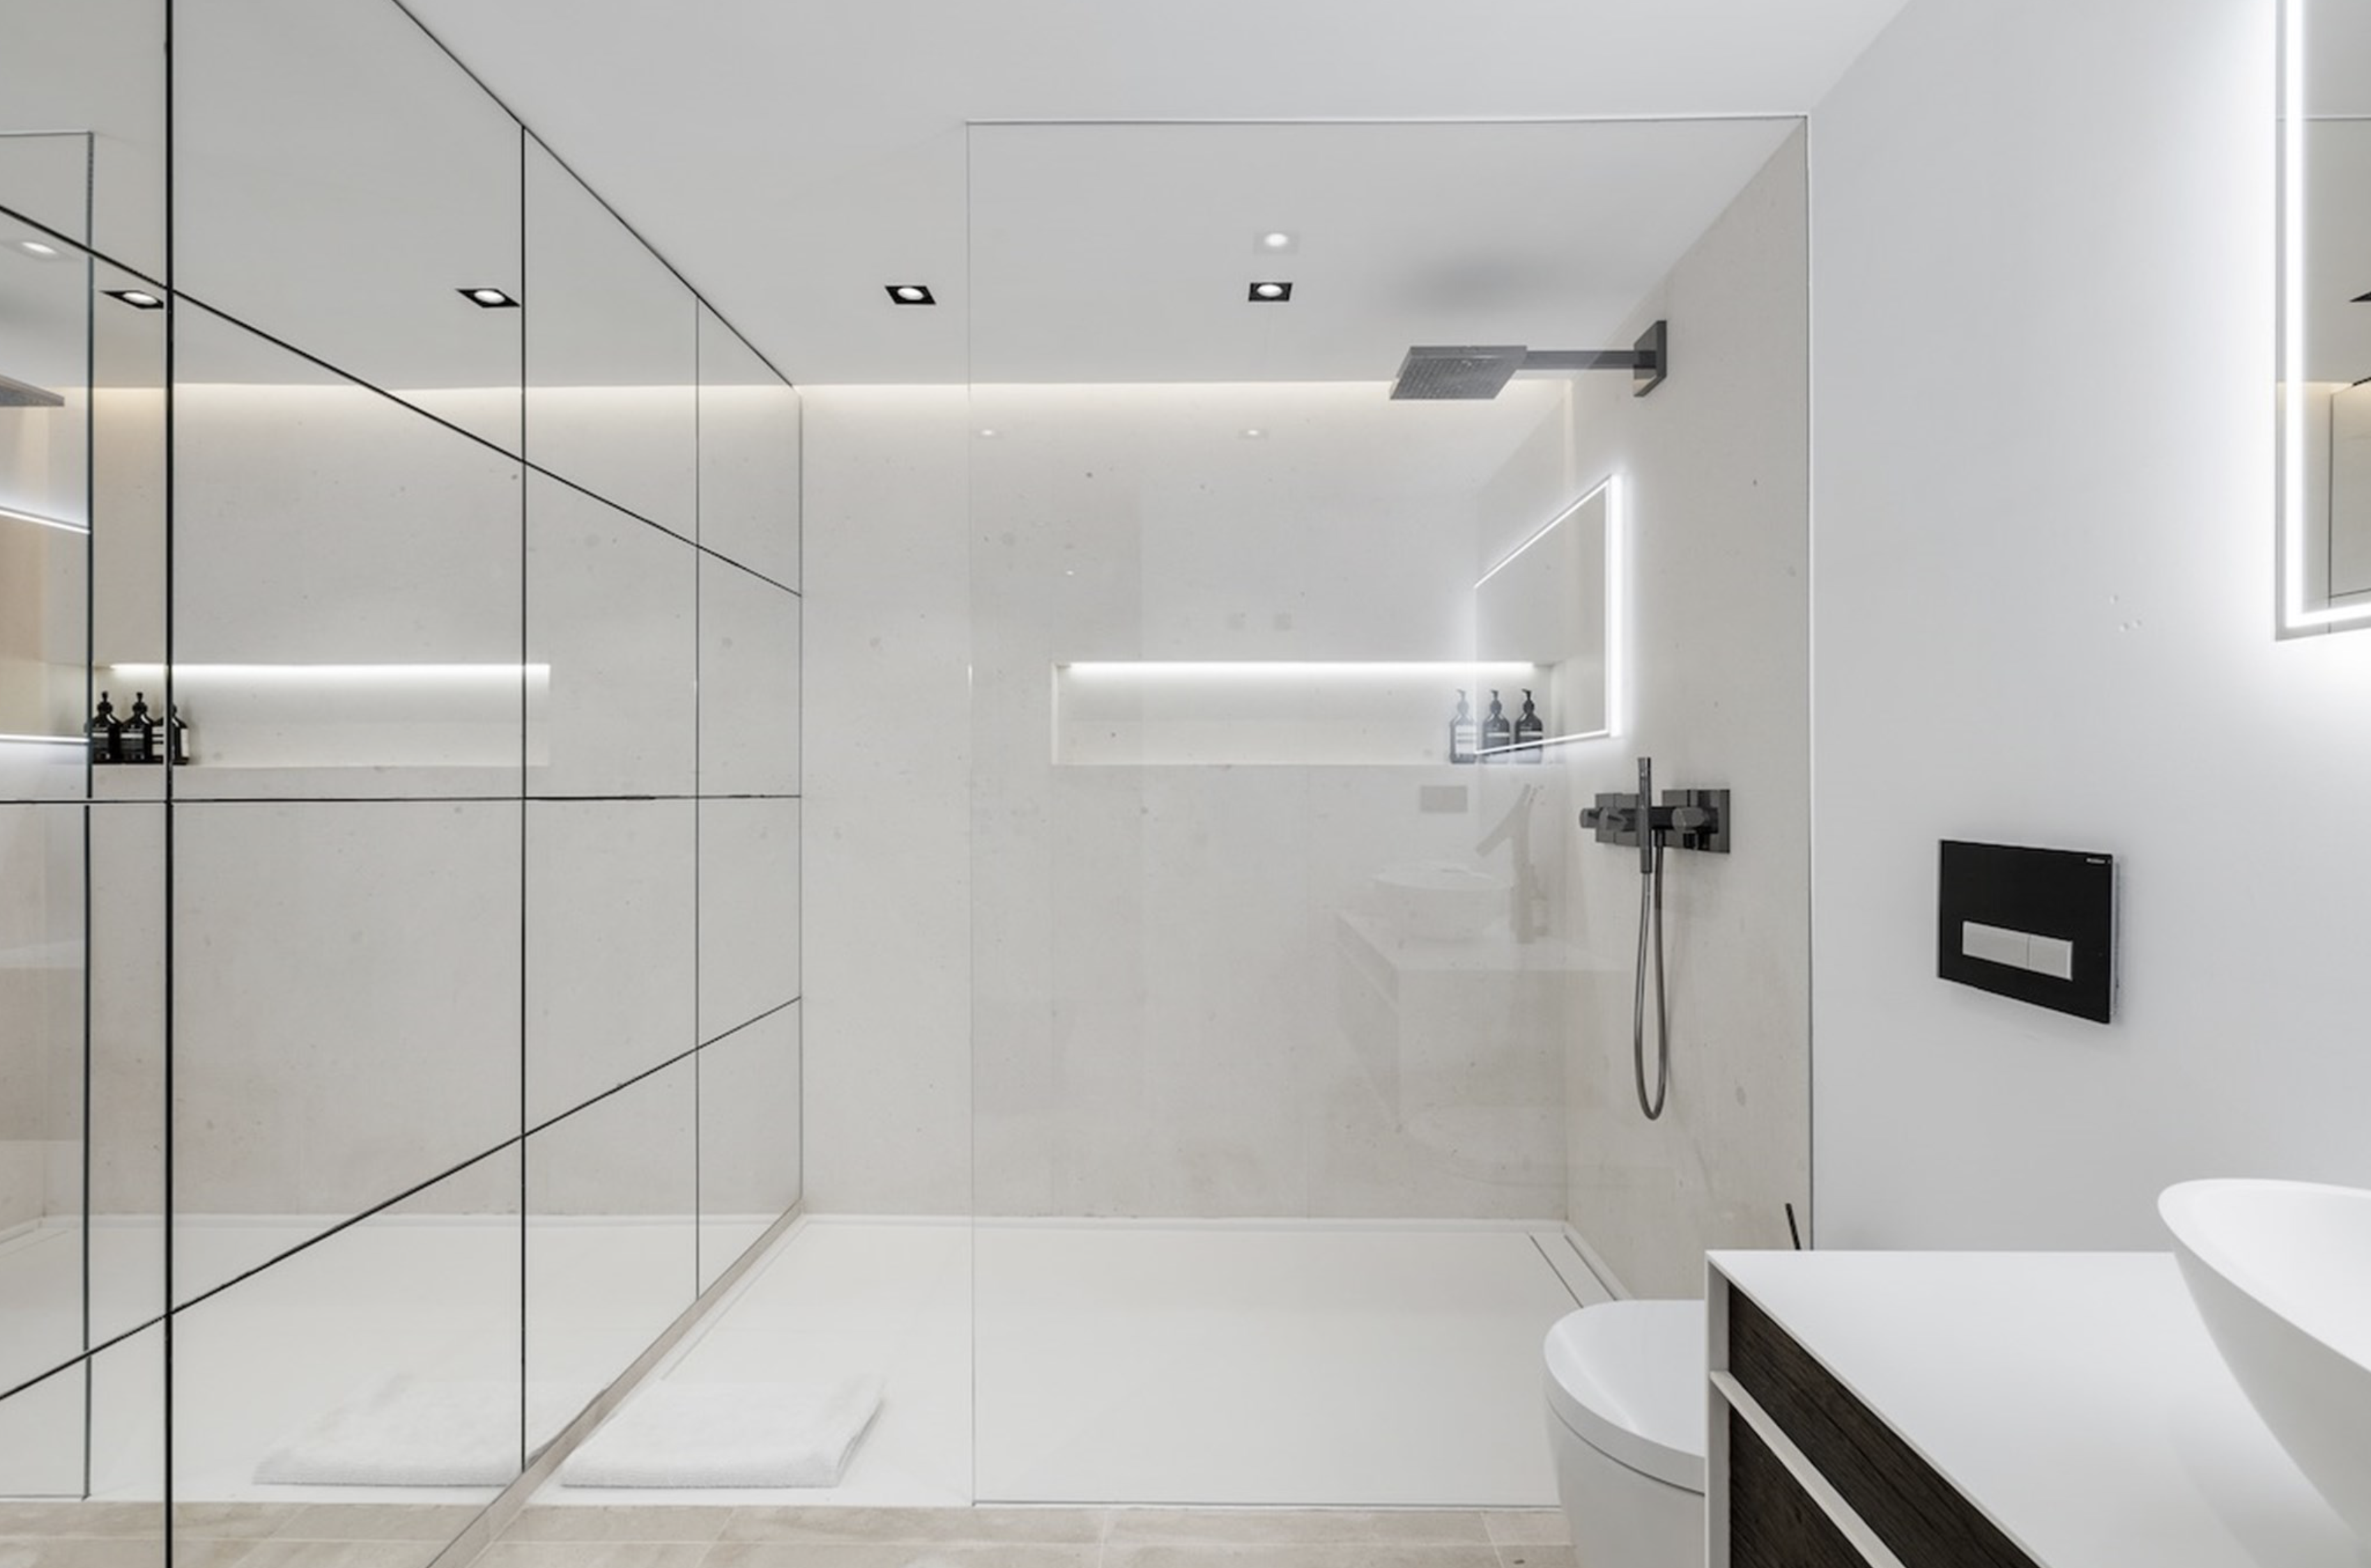 Resa Estates can nemo luxury villa Pep simo Ibiza walkin shower.png